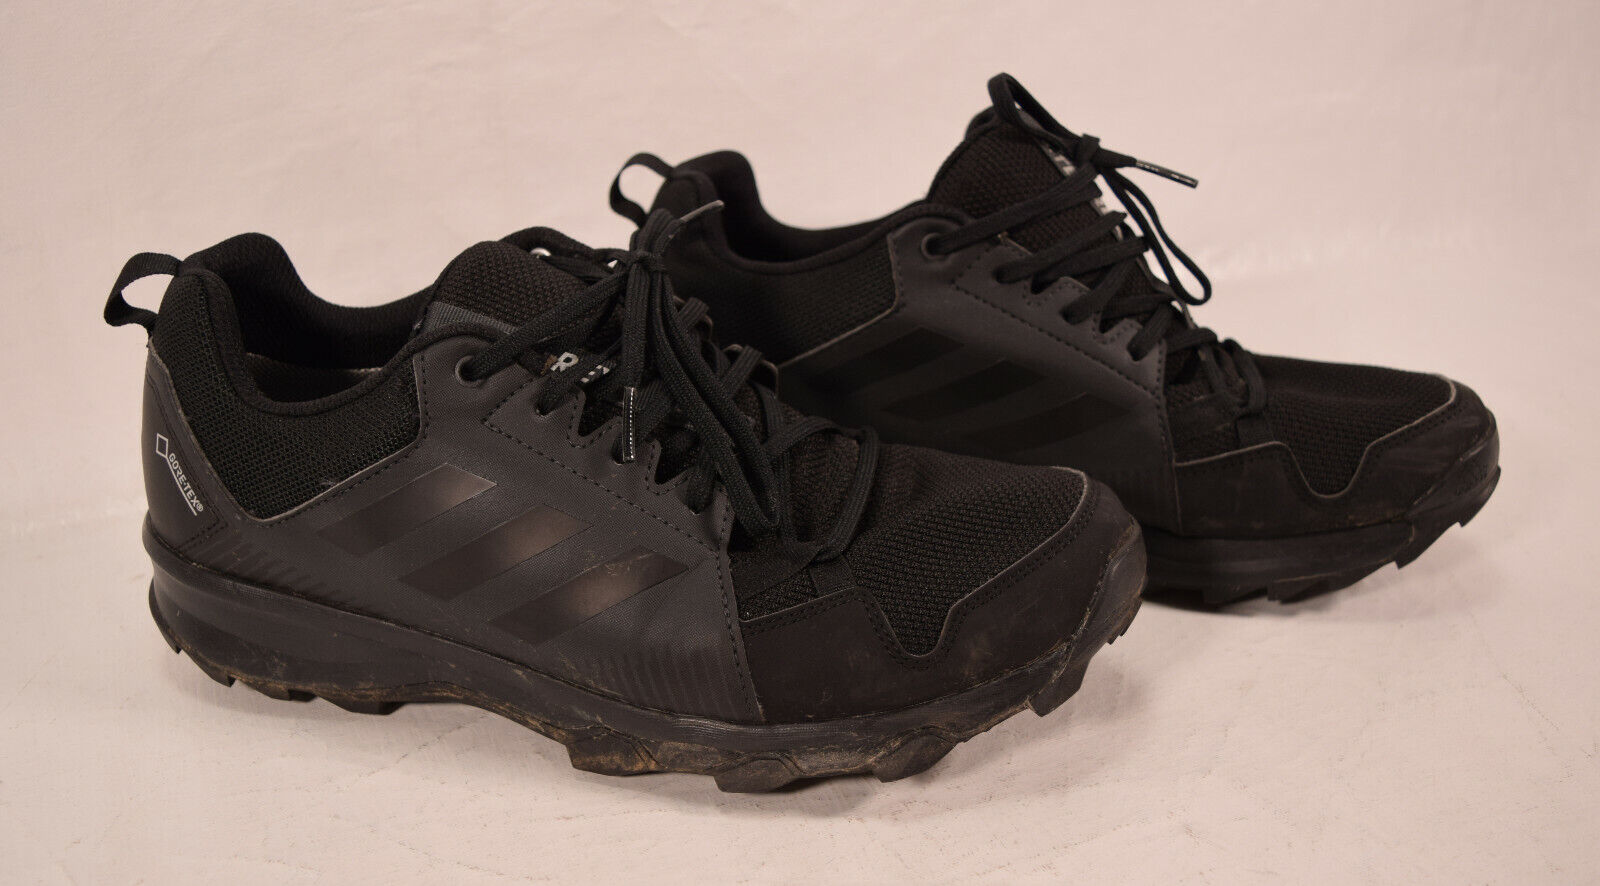 Concession have confidence rural Adidas GoreTex Mens Shoes Terrex Tracerocker GTX CM7593 Black US 10 | eBay